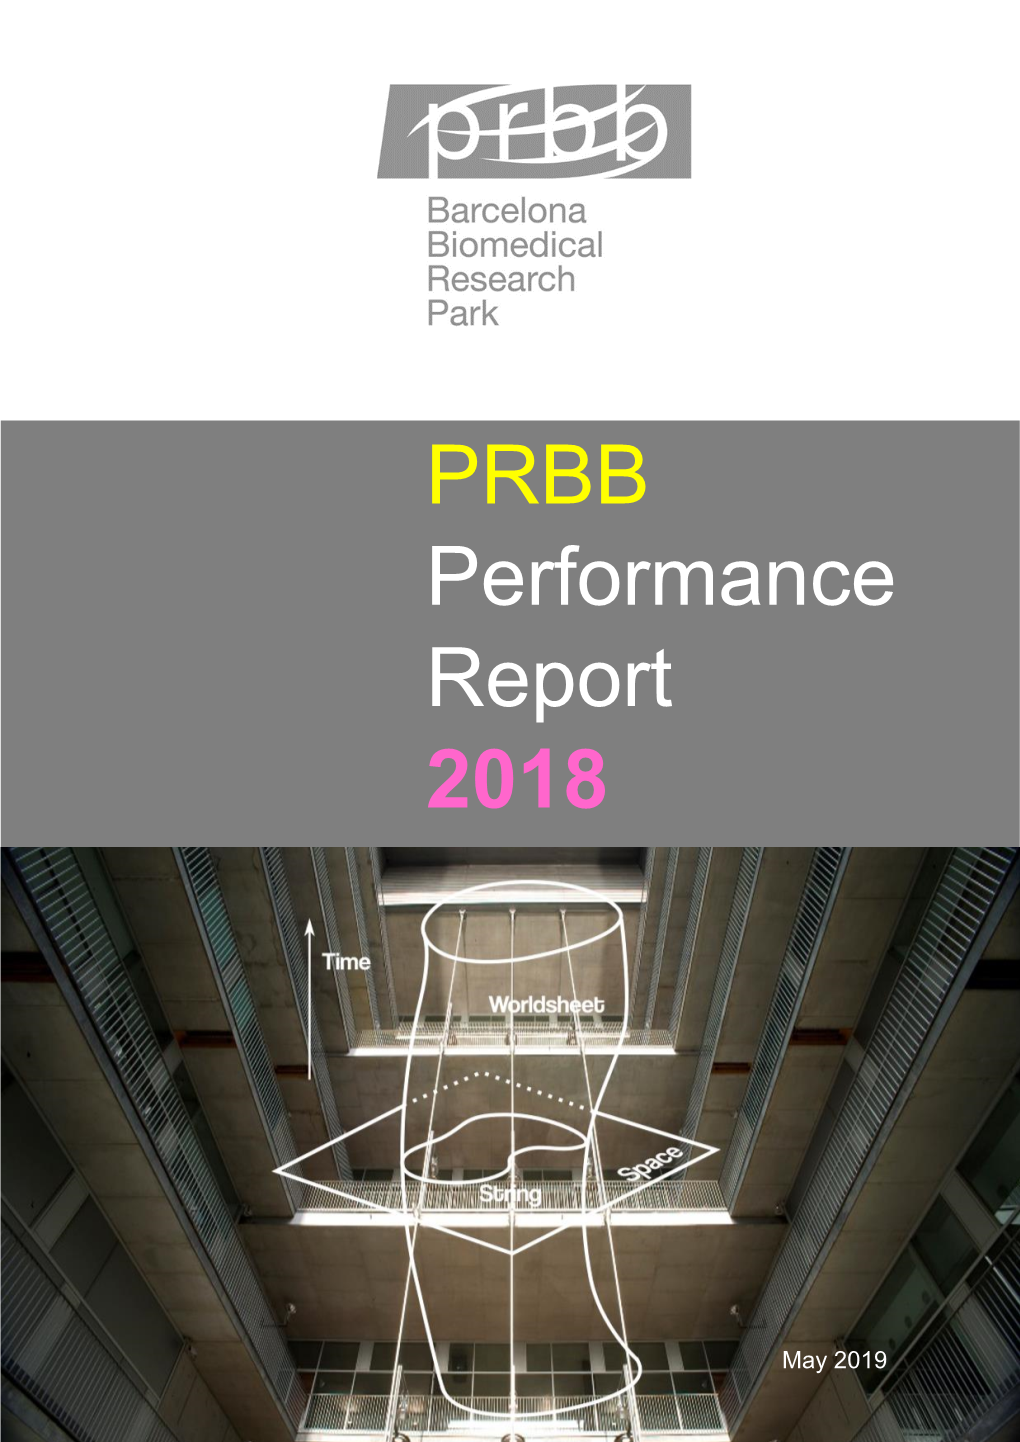 PRBB Performance Report 2018